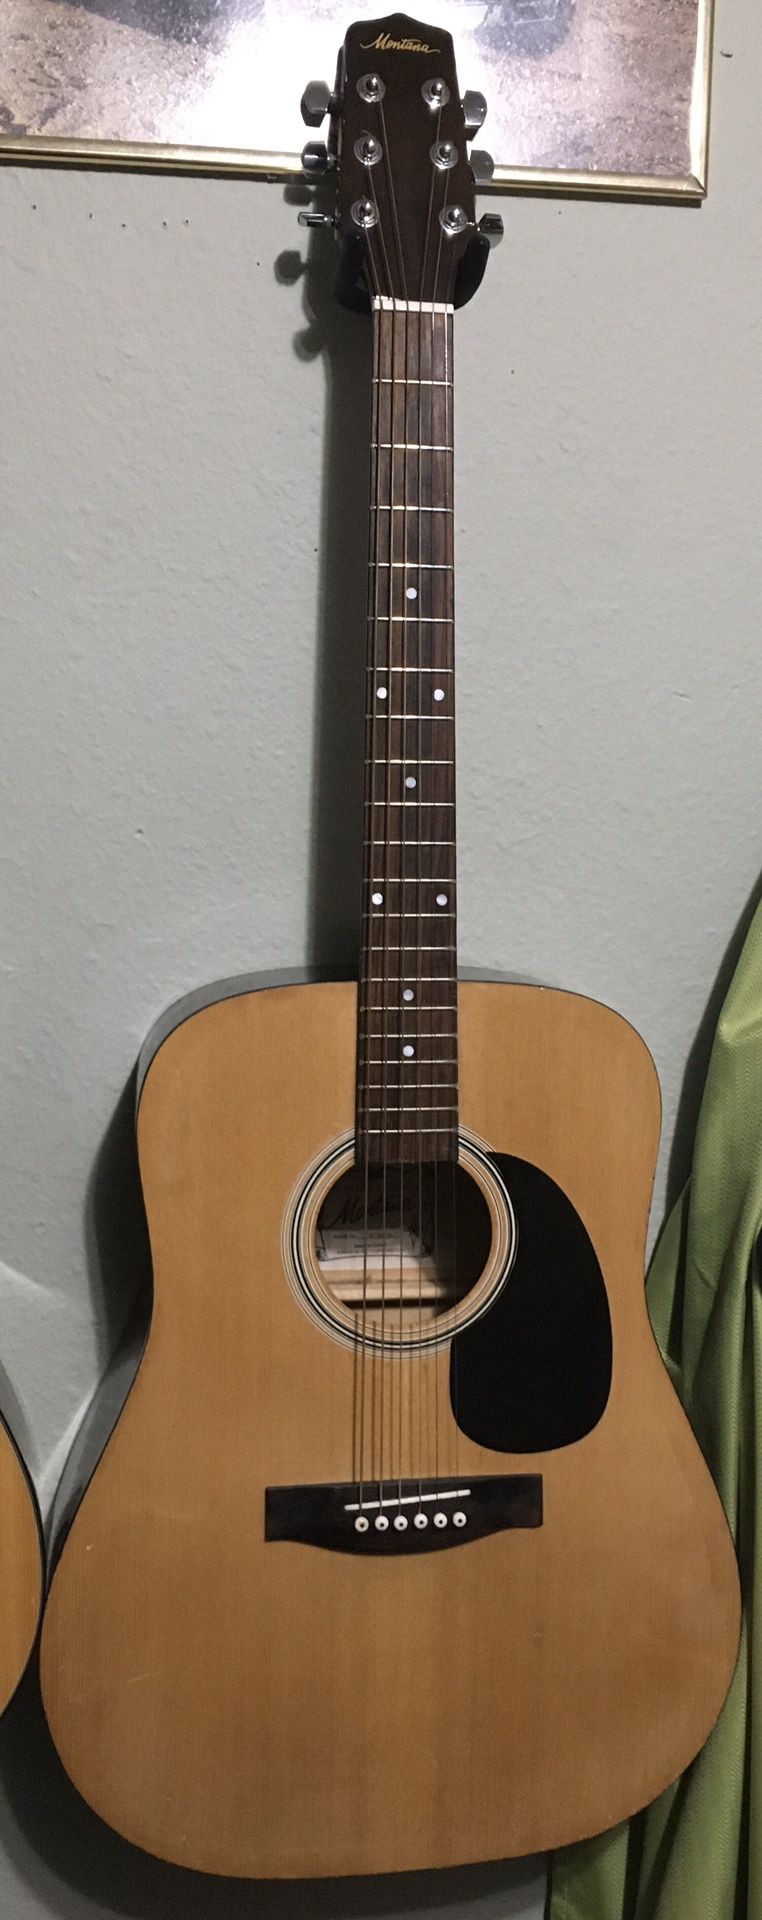 Montana guitar